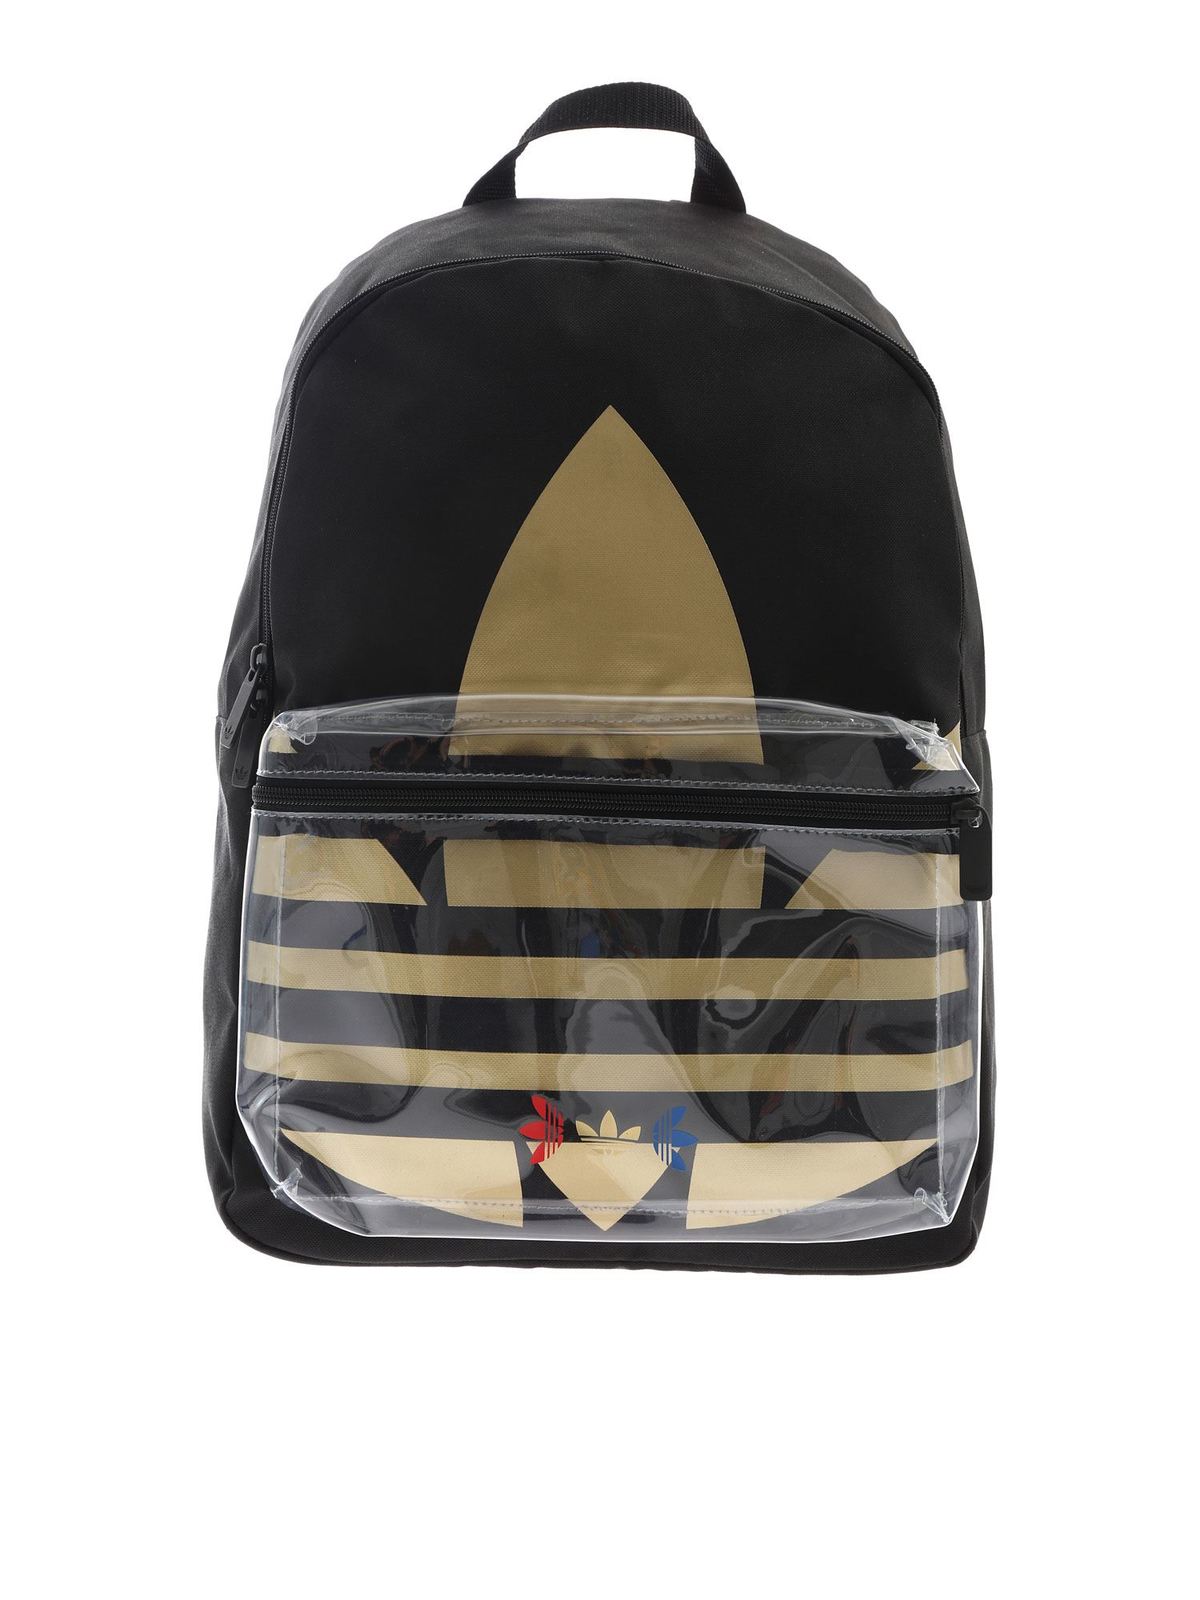 Adidas Originals - Trefoil backpack in 